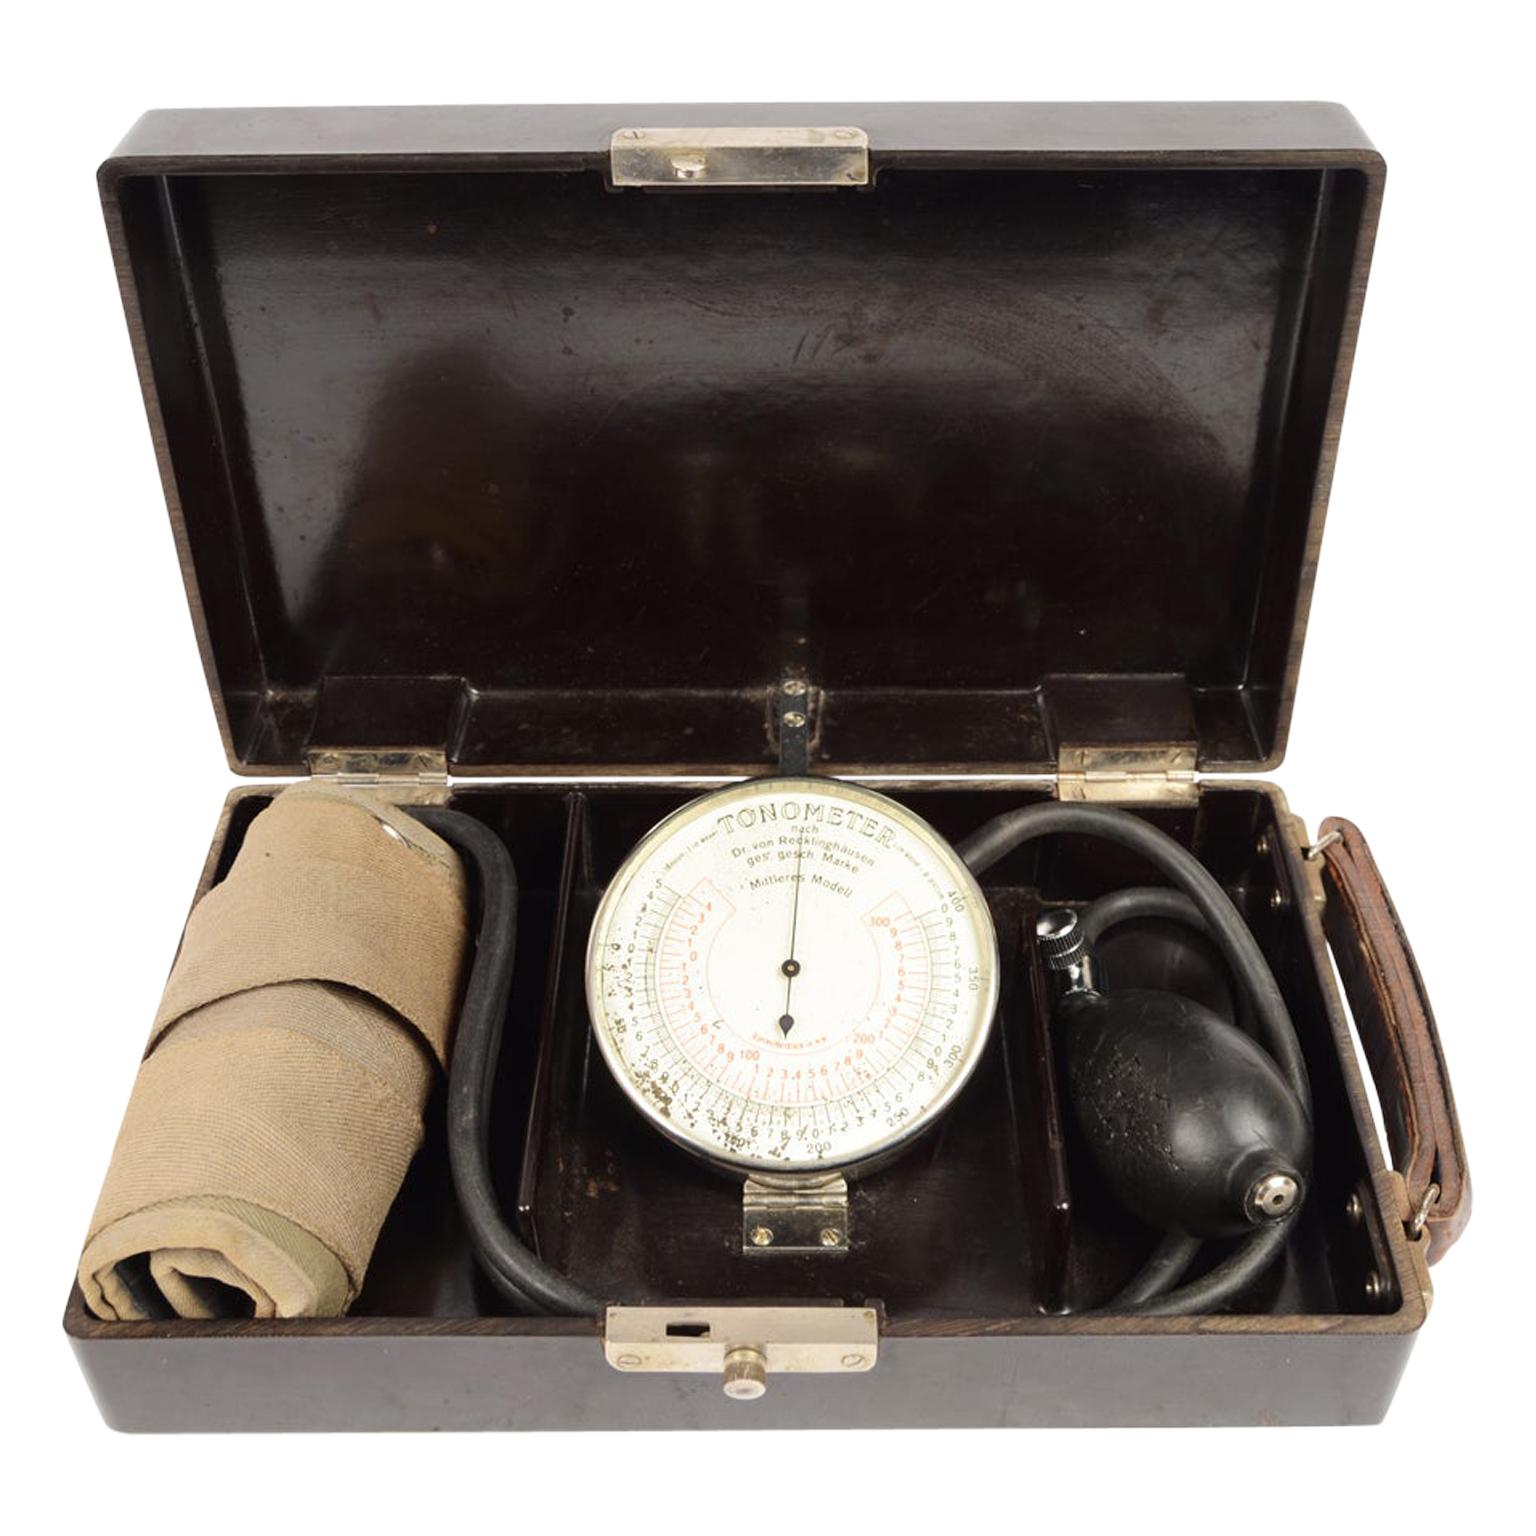 Vintage Medical Sphygmomanometer in its Original Bakelite Box, German 1930s